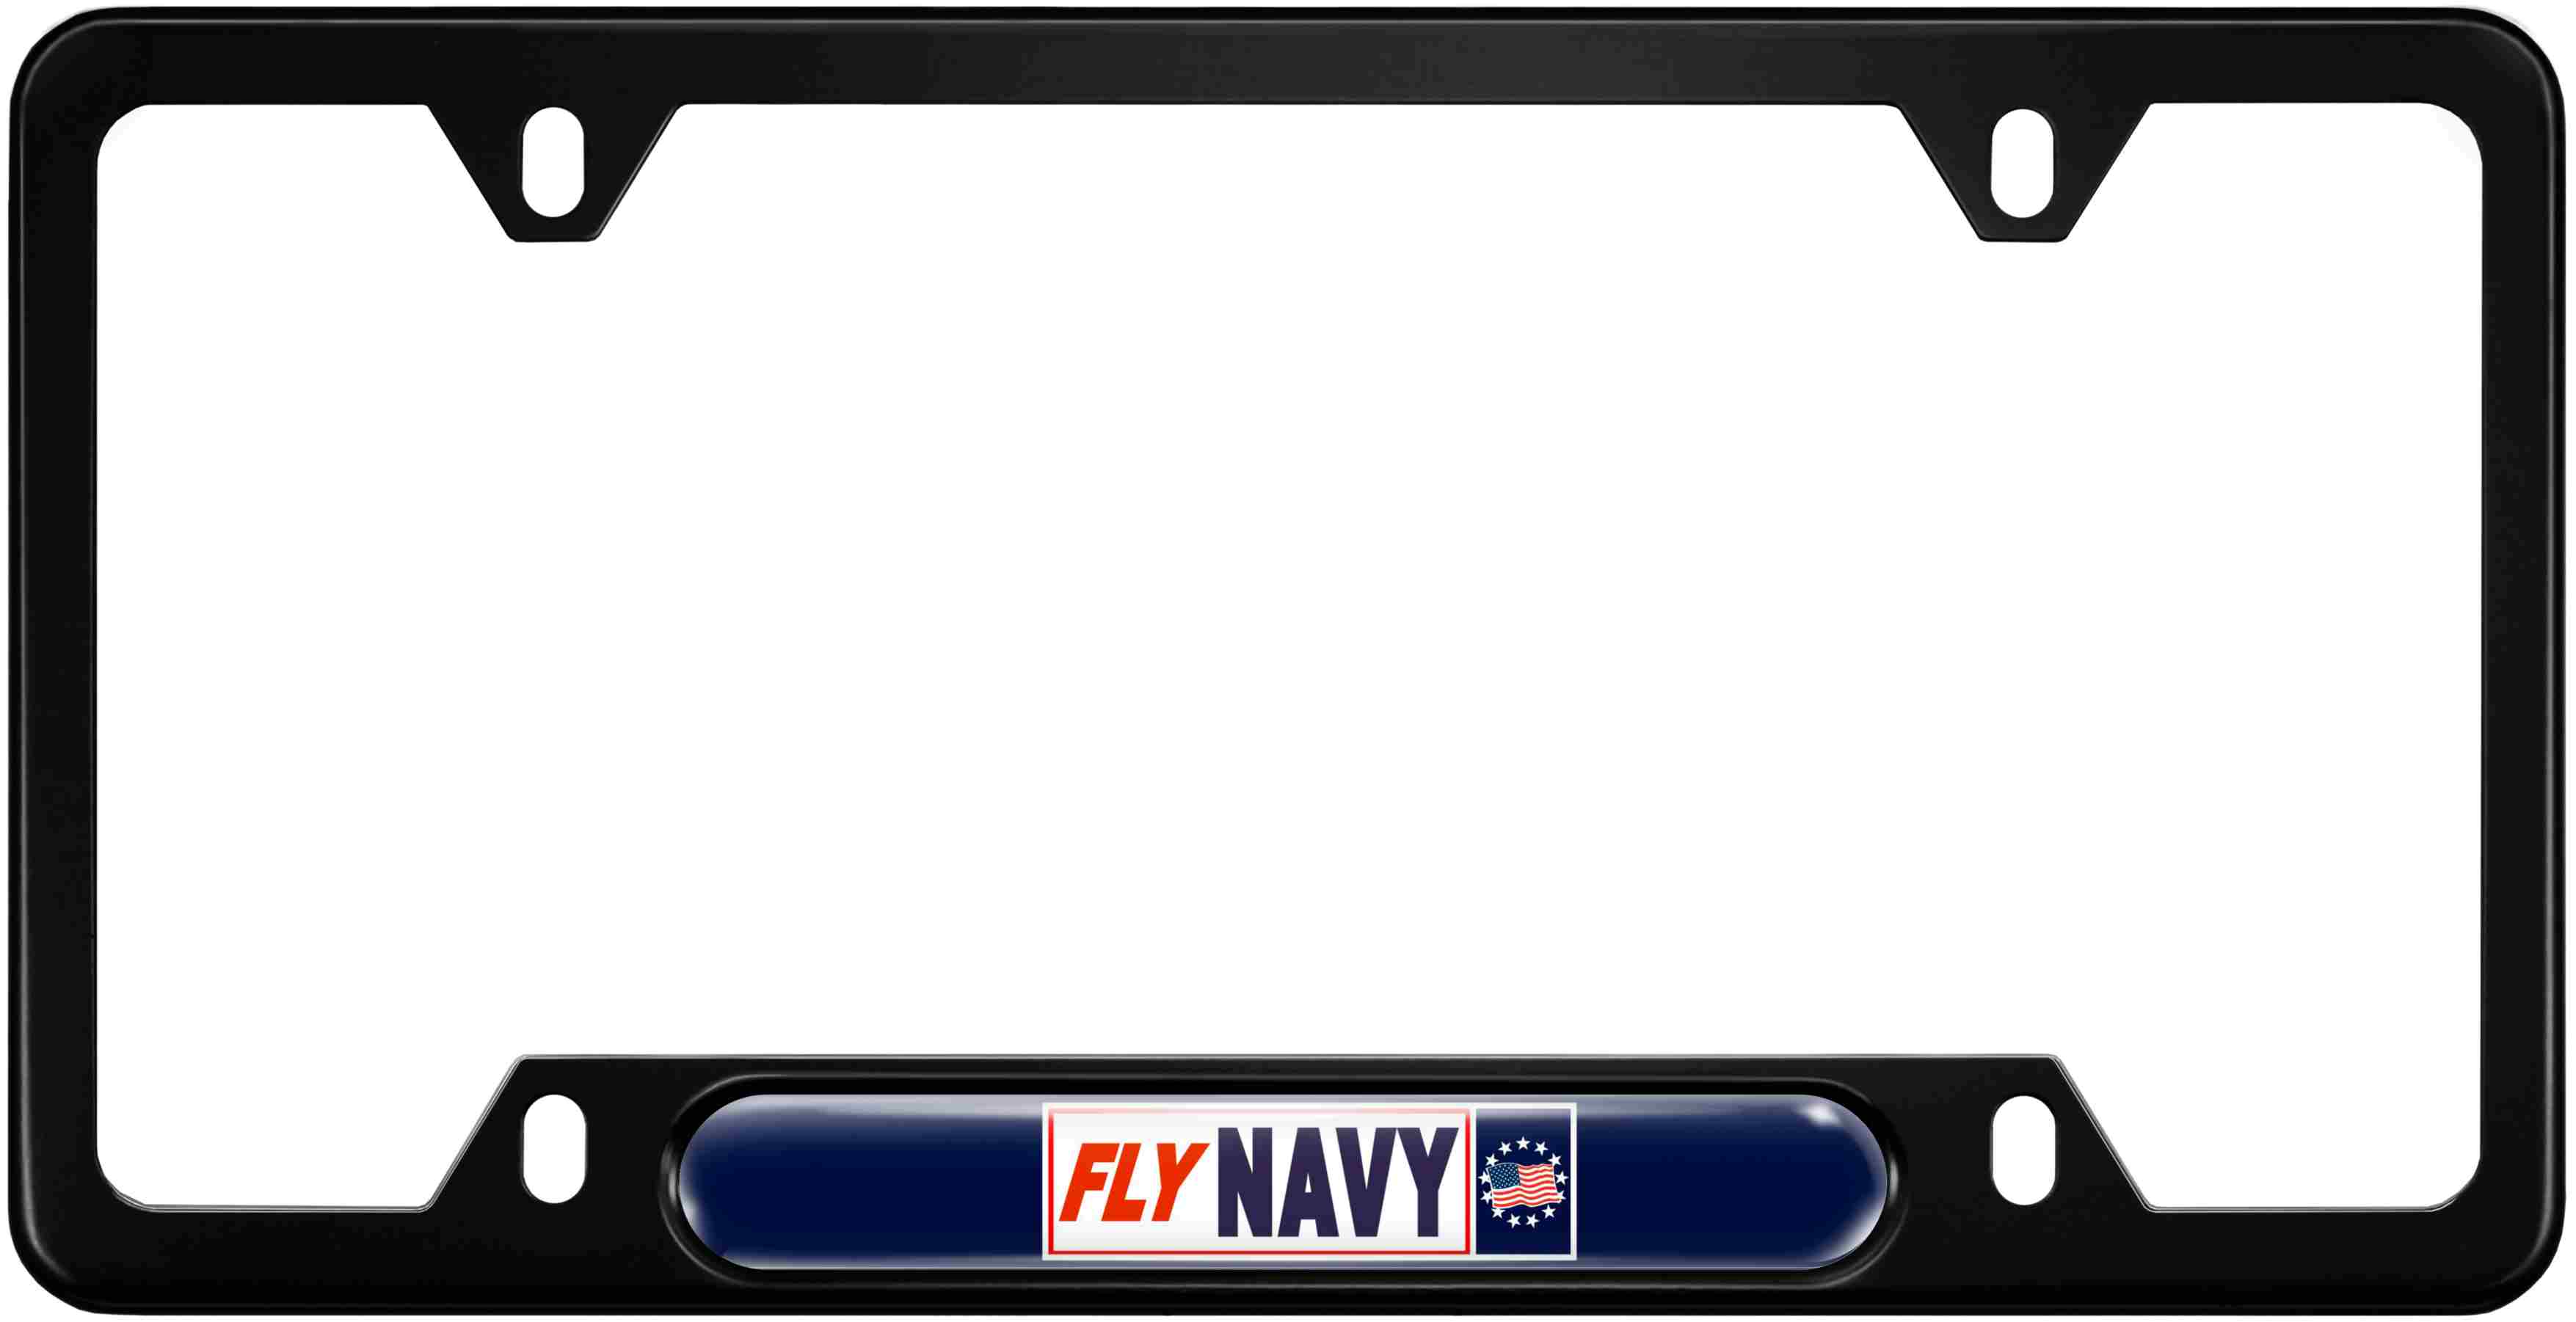 Naval Aviation - Fly Navy - Car Metal License Plate Frame